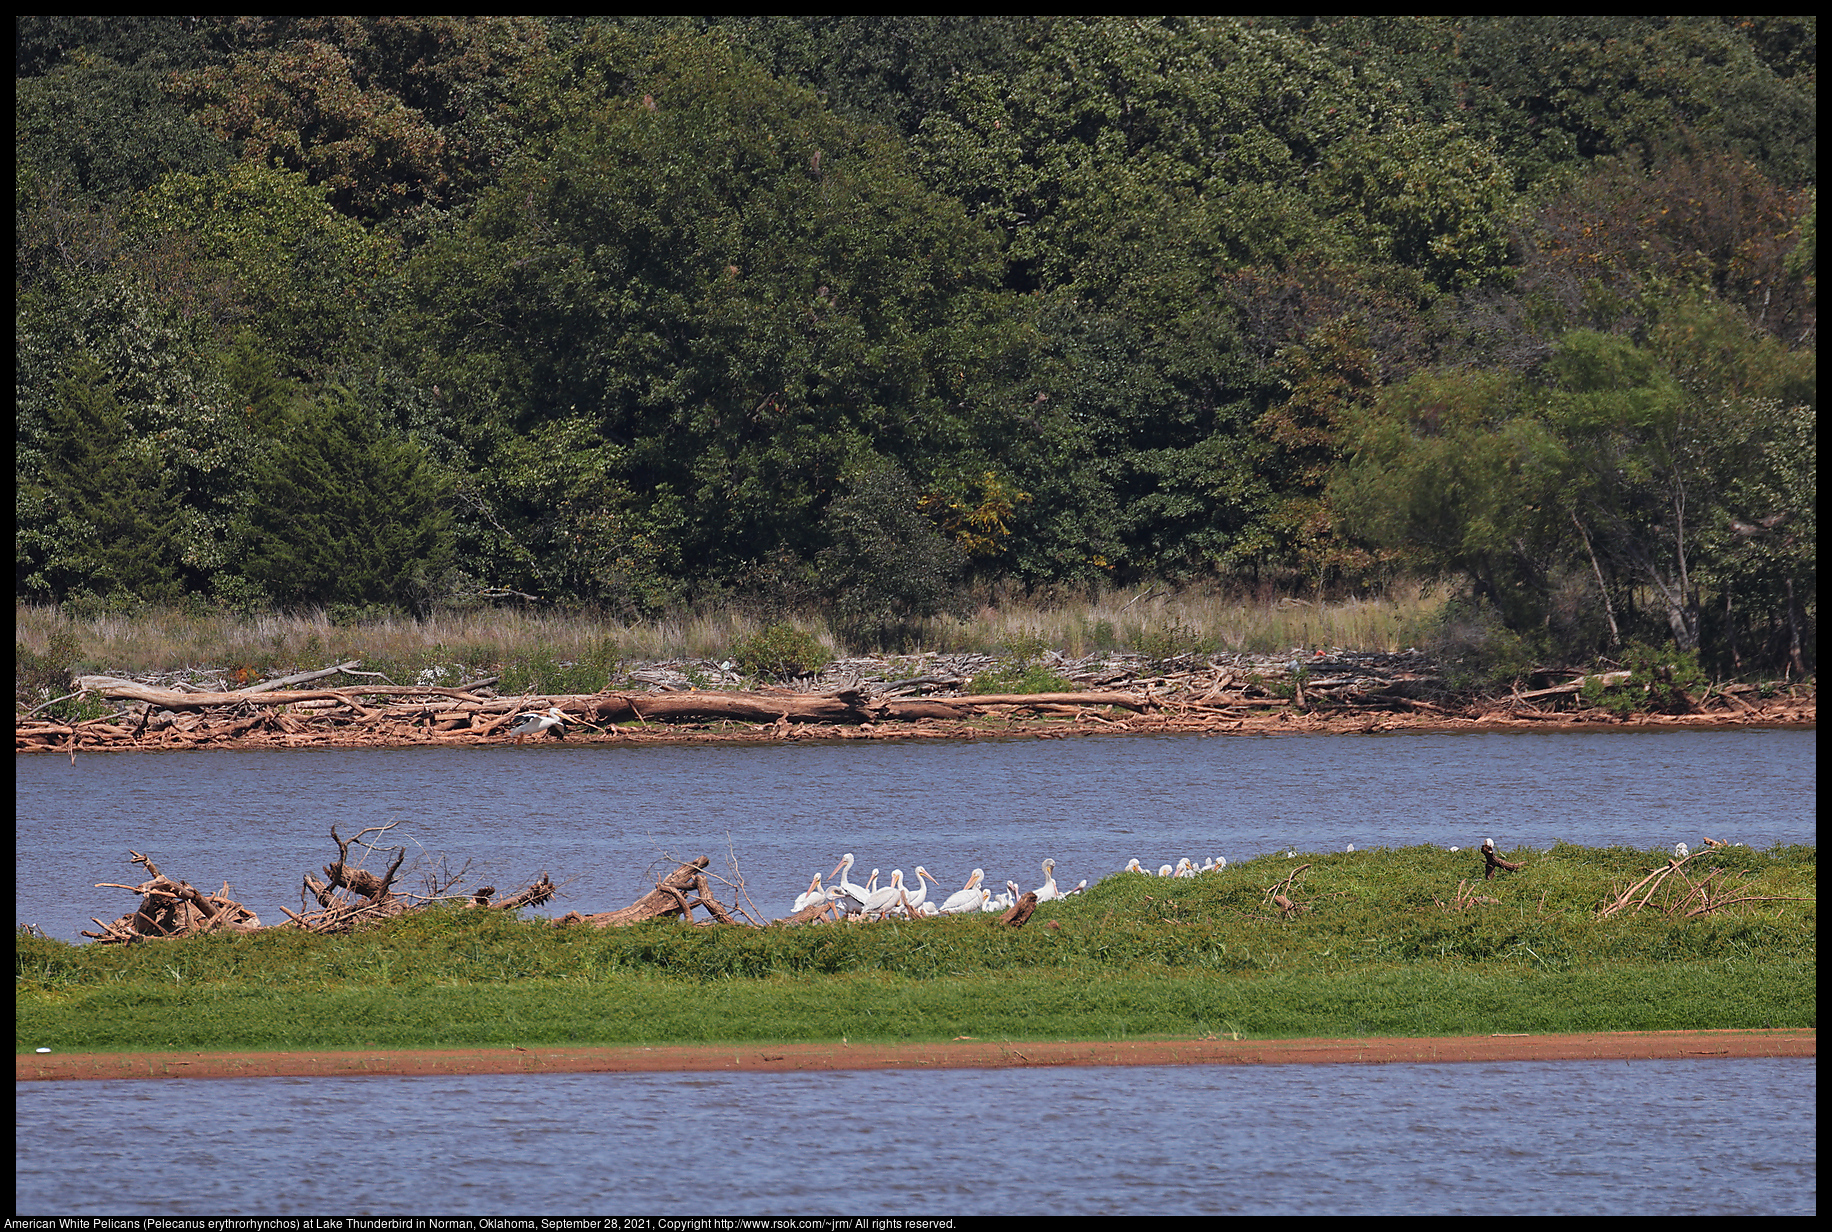 American White Pelicans (Pelecanus erythrorhynchos) at Lake Thunderbird in Norman, Oklahoma, September 28, 2021